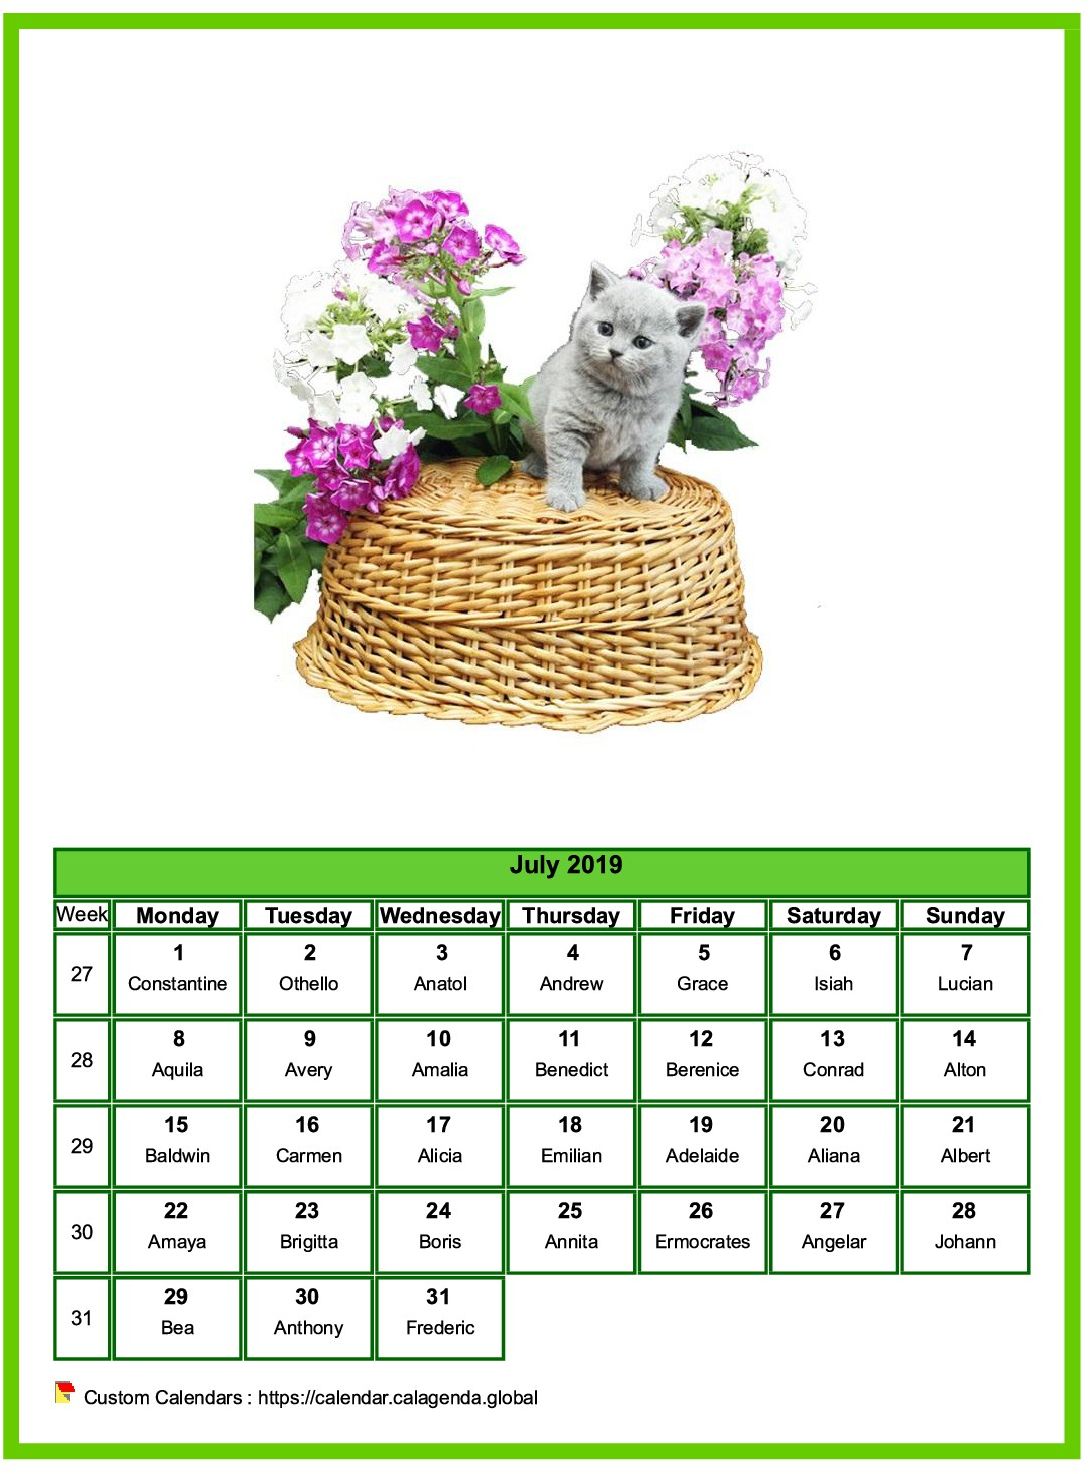 Calendar July 2019 cats